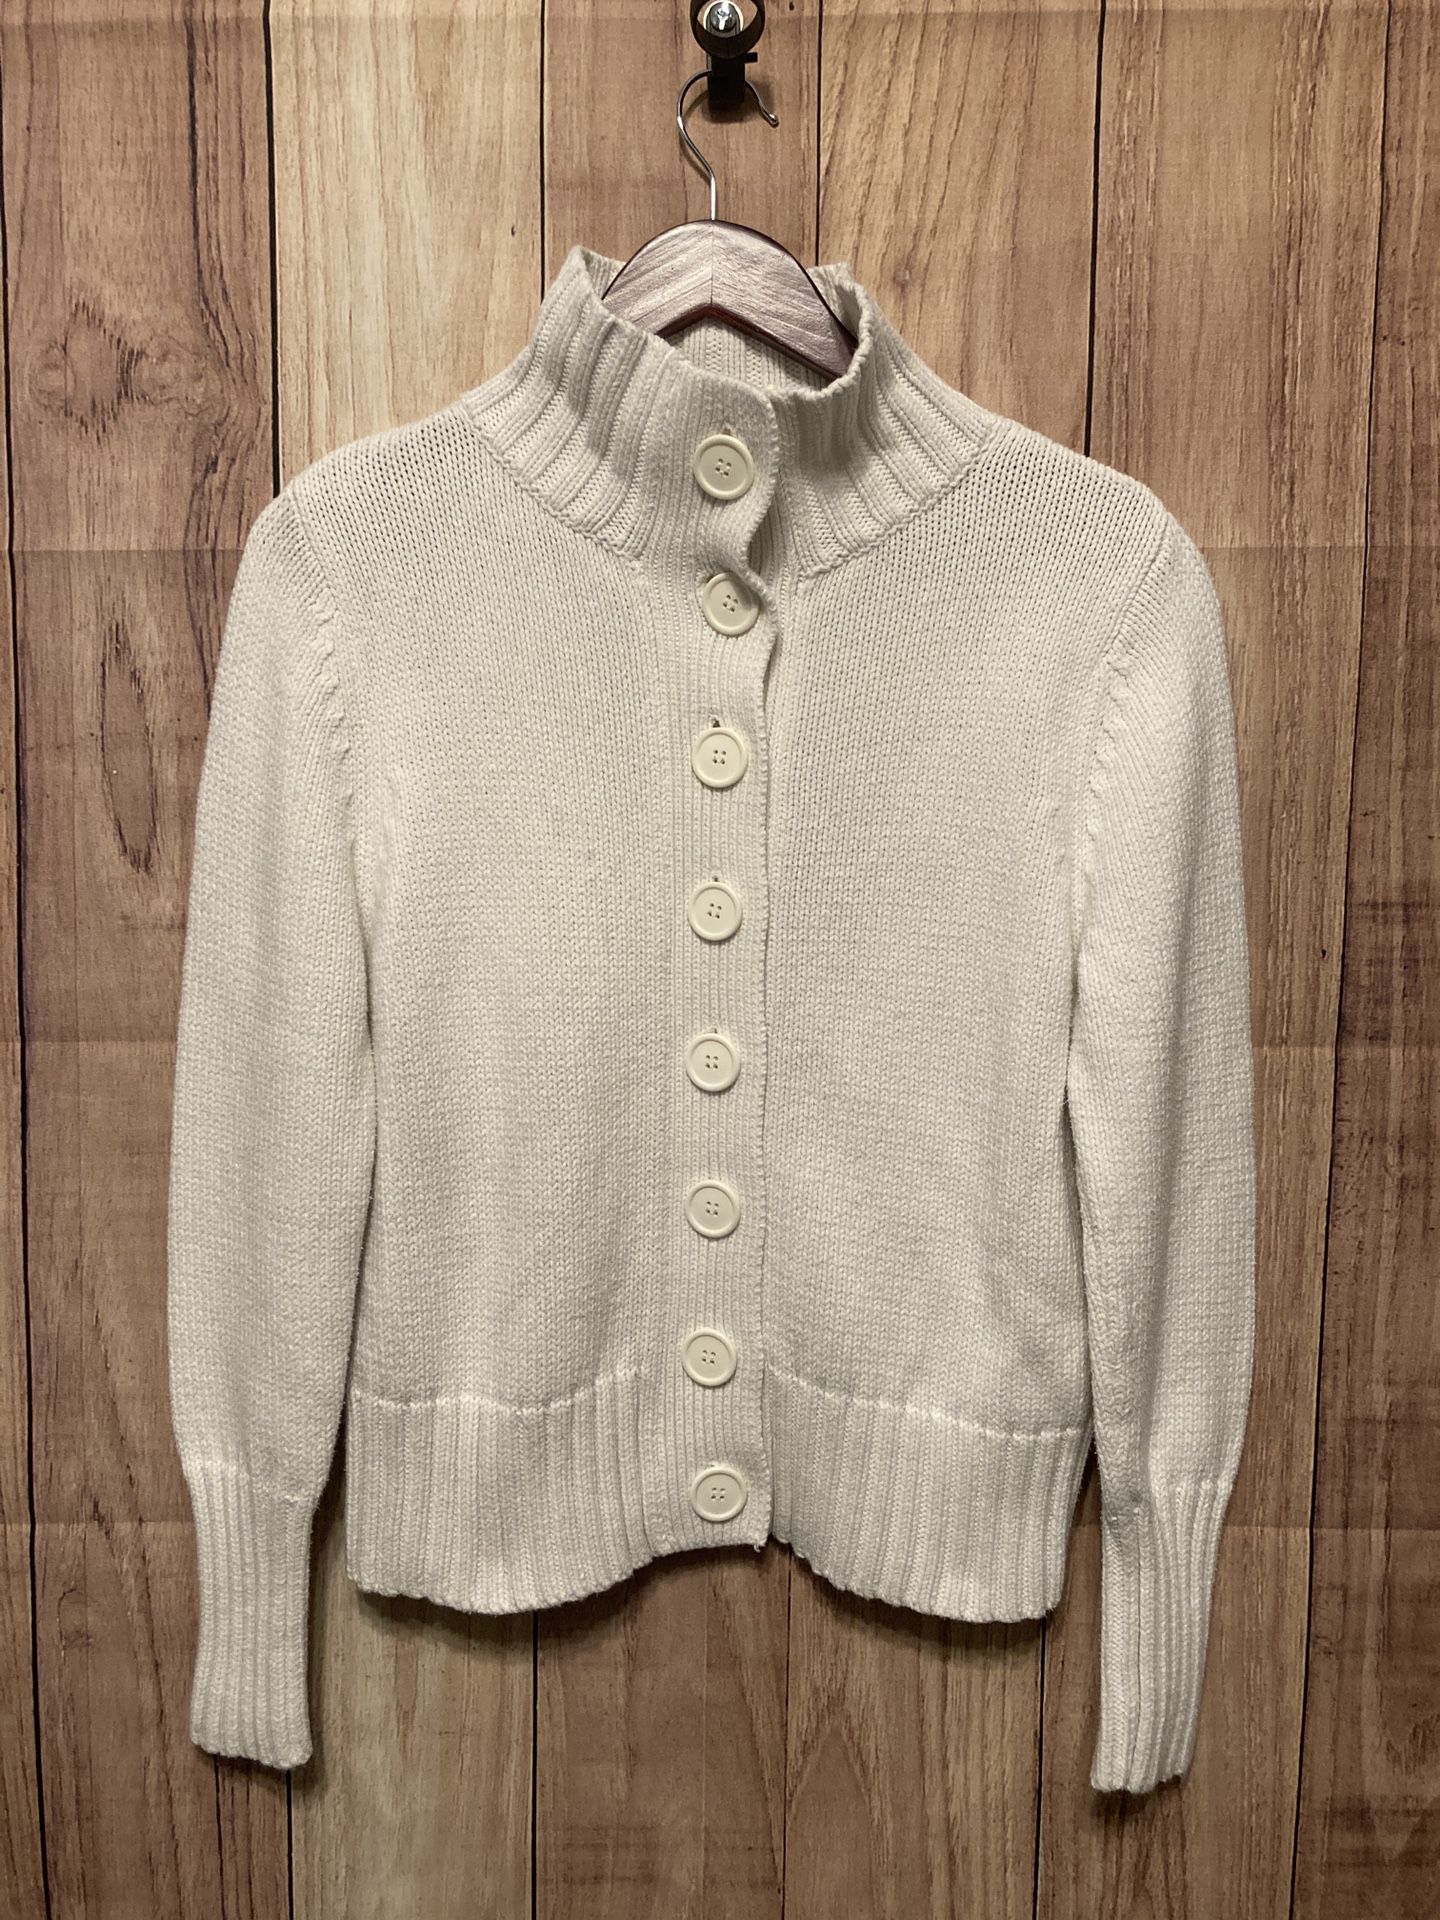 Marks & Spencer Medium white button sweater chunky cardigan